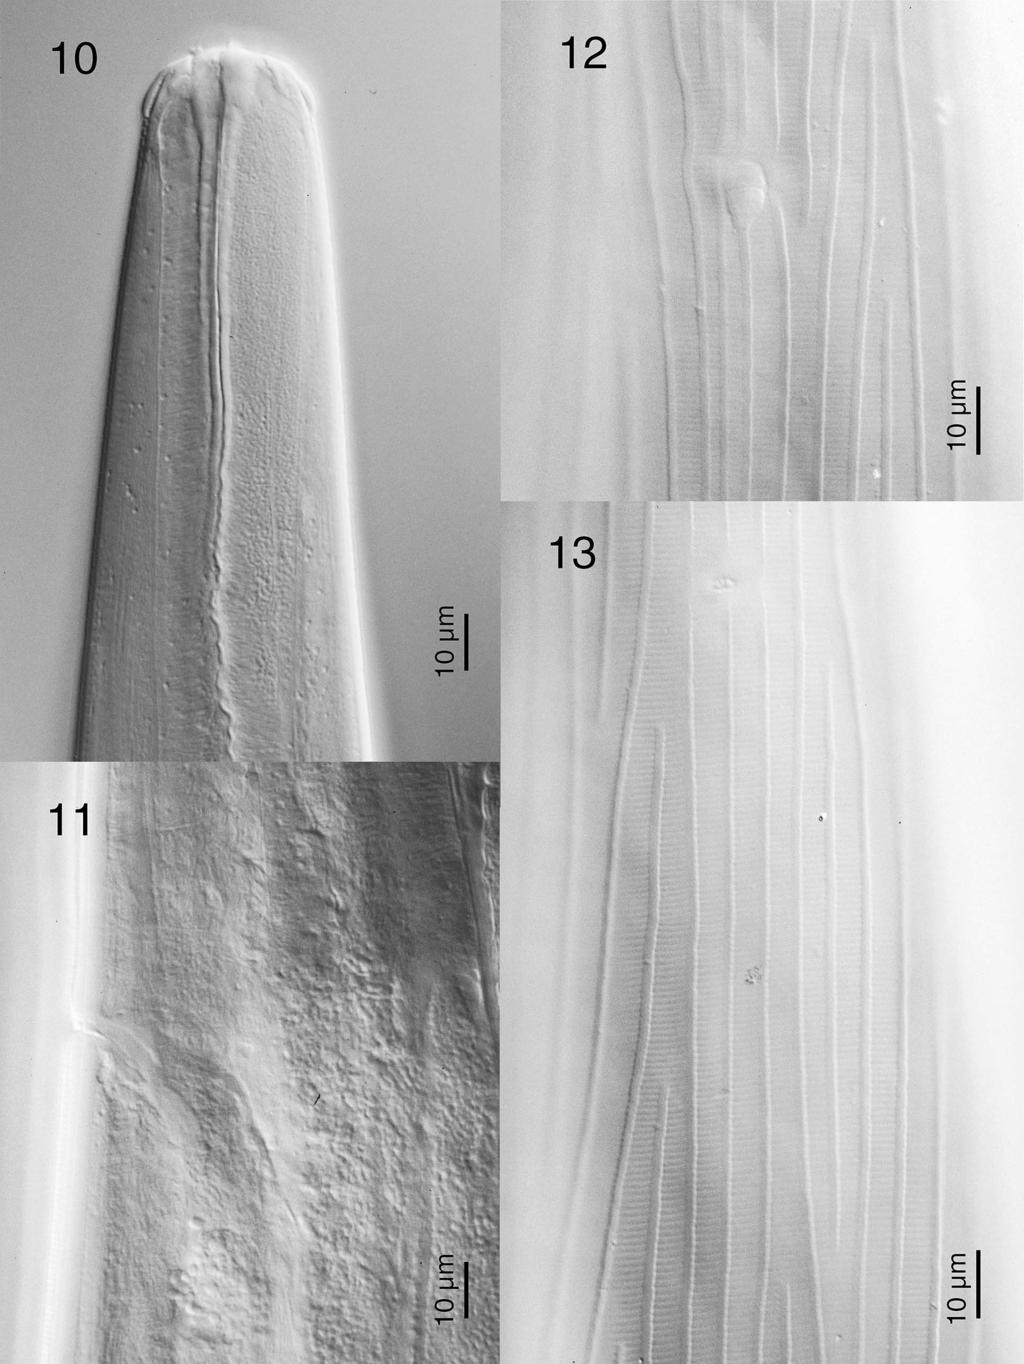 HOBERG ET AL. AFRICAN OSTERTAGIINAE 235 FIGURES 10 13. Africanastrongylus buceros gen. nov. et sp. nov., cervical and cephalic attributes based on photomicrographs in a female paratype (USNPC 99551).